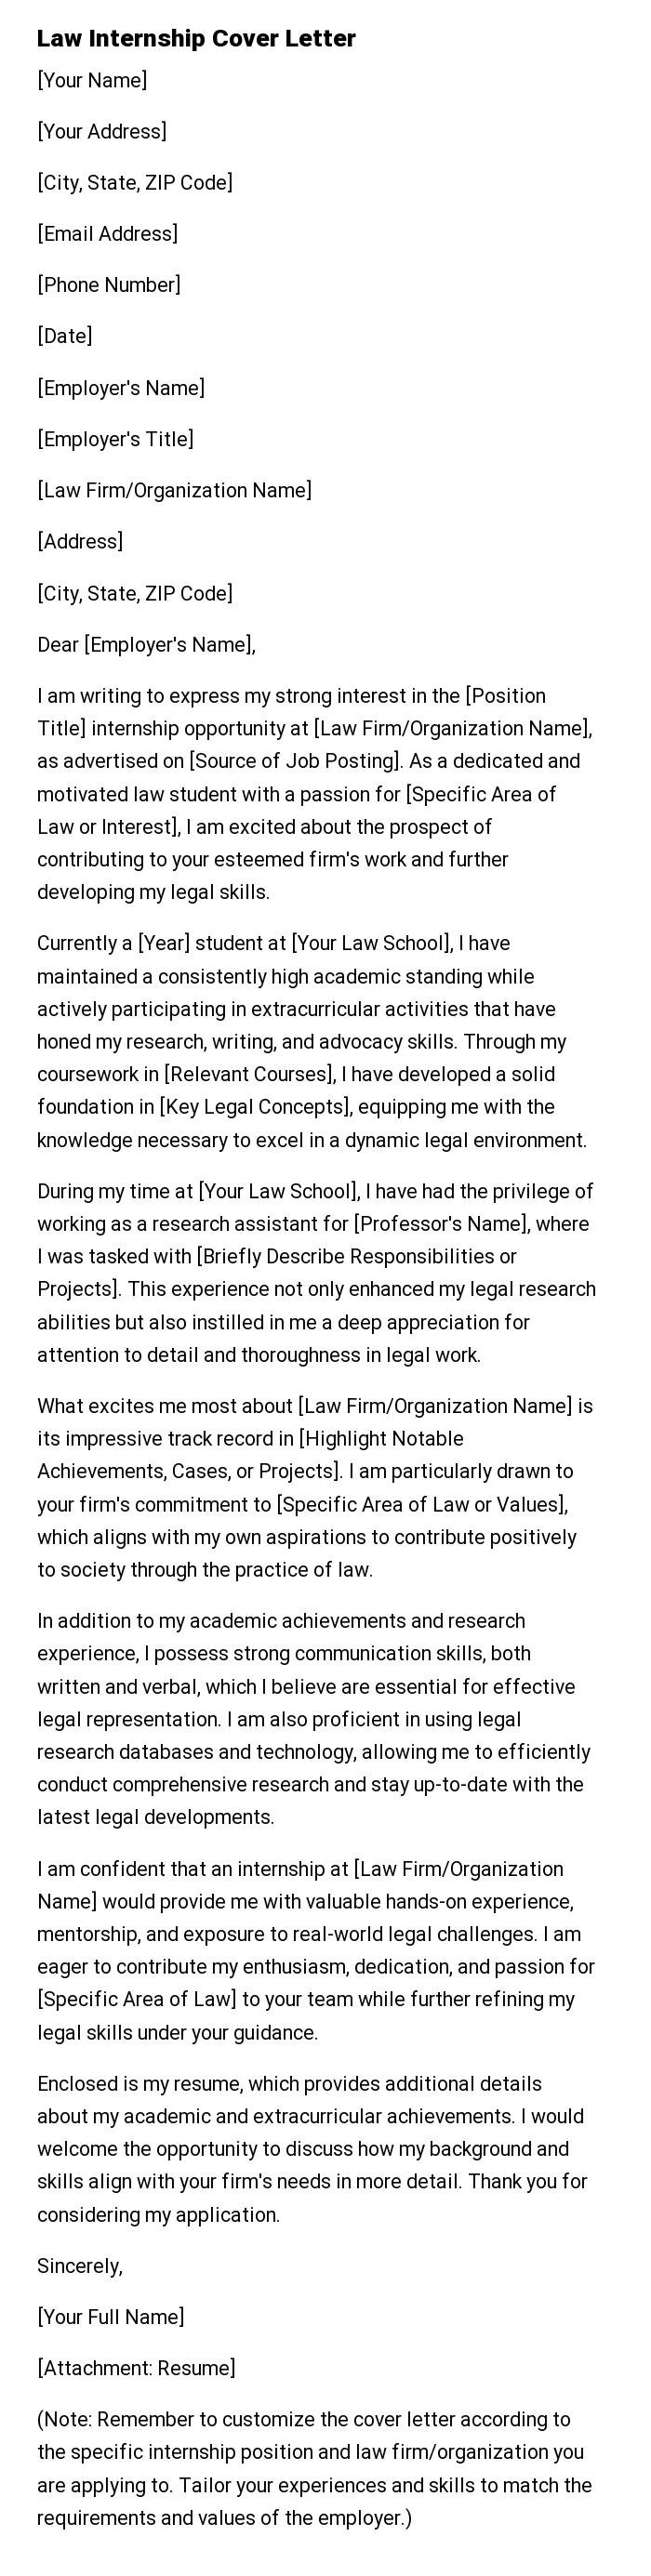 Law Internship Cover Letter